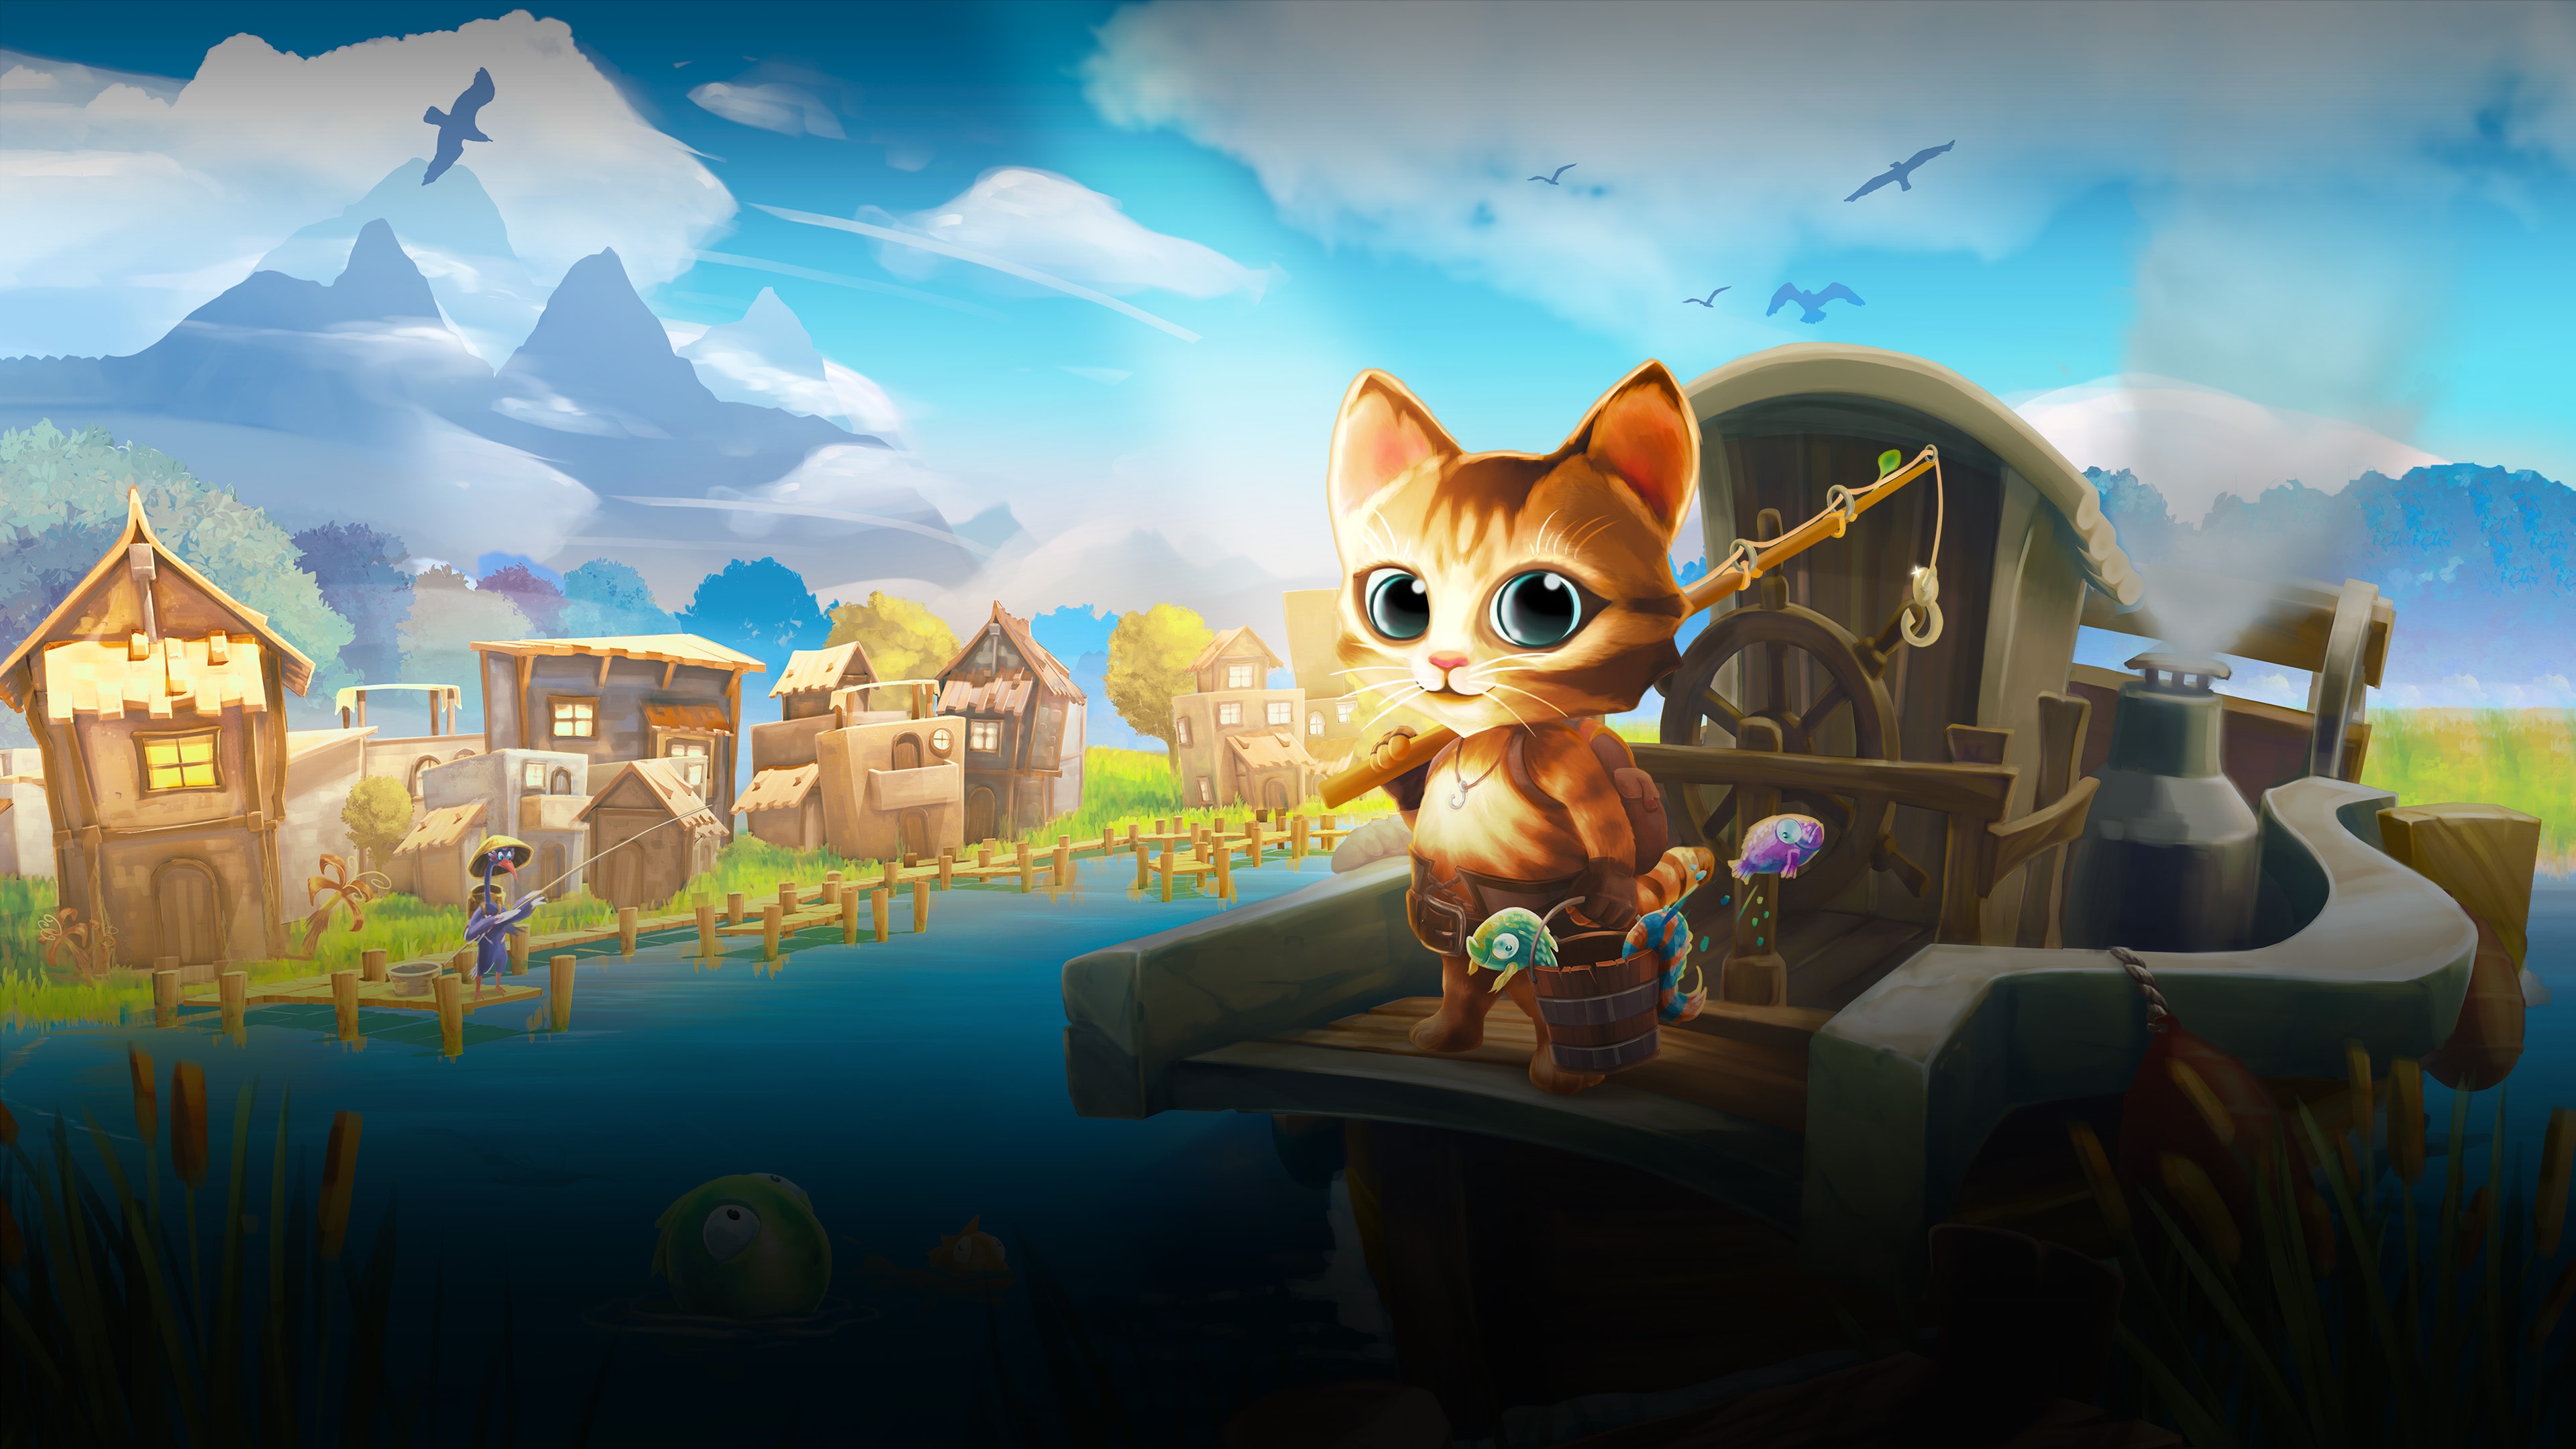 Whisker Waters leva gato pescador a um mundo mágico no PS5